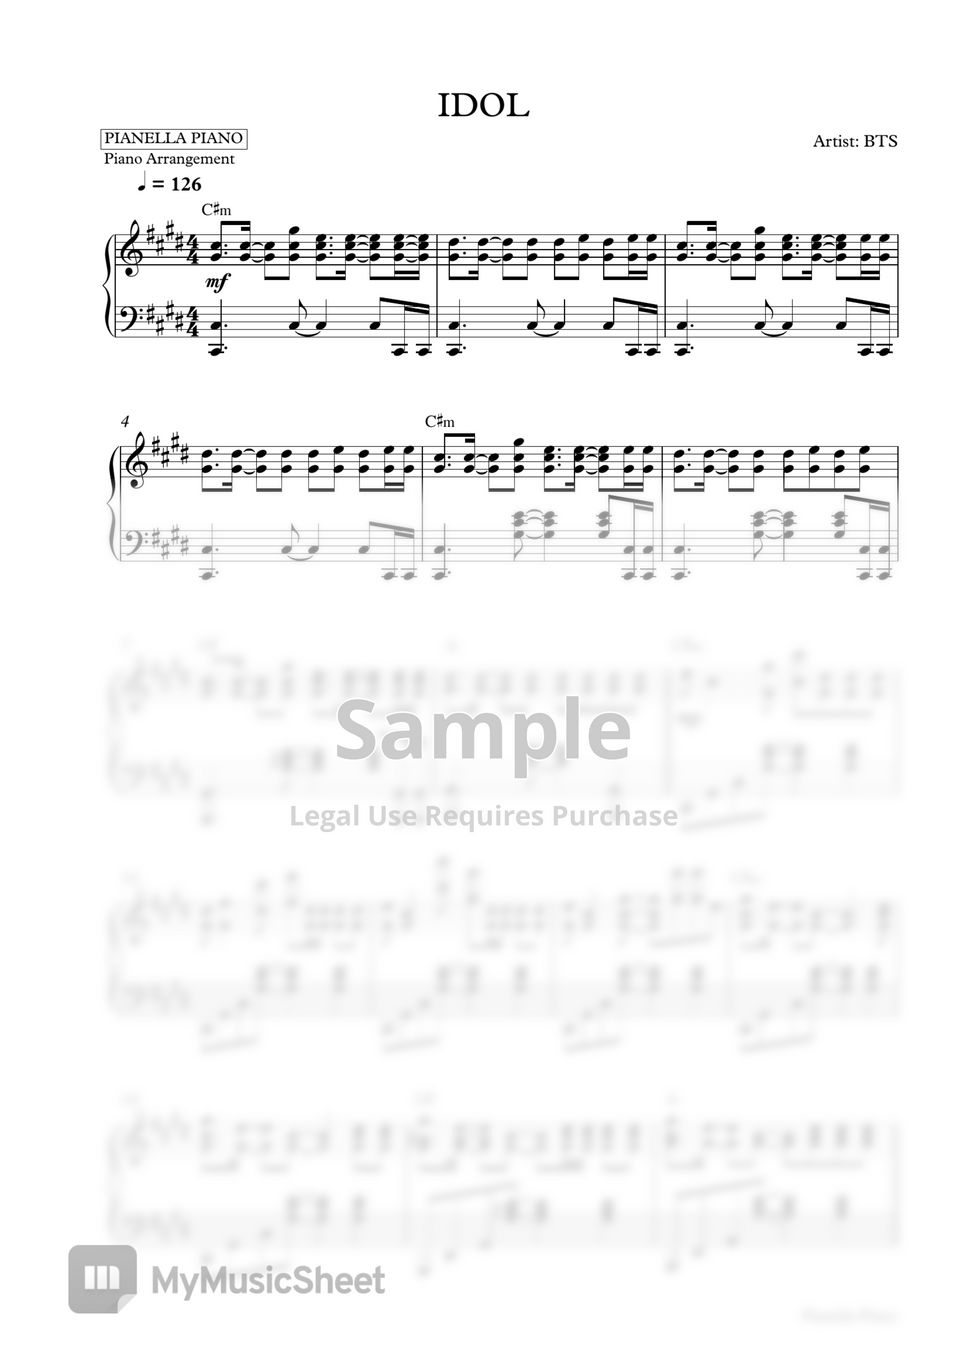 BTS - IDOL (Piano Sheet) by Pianella Piano